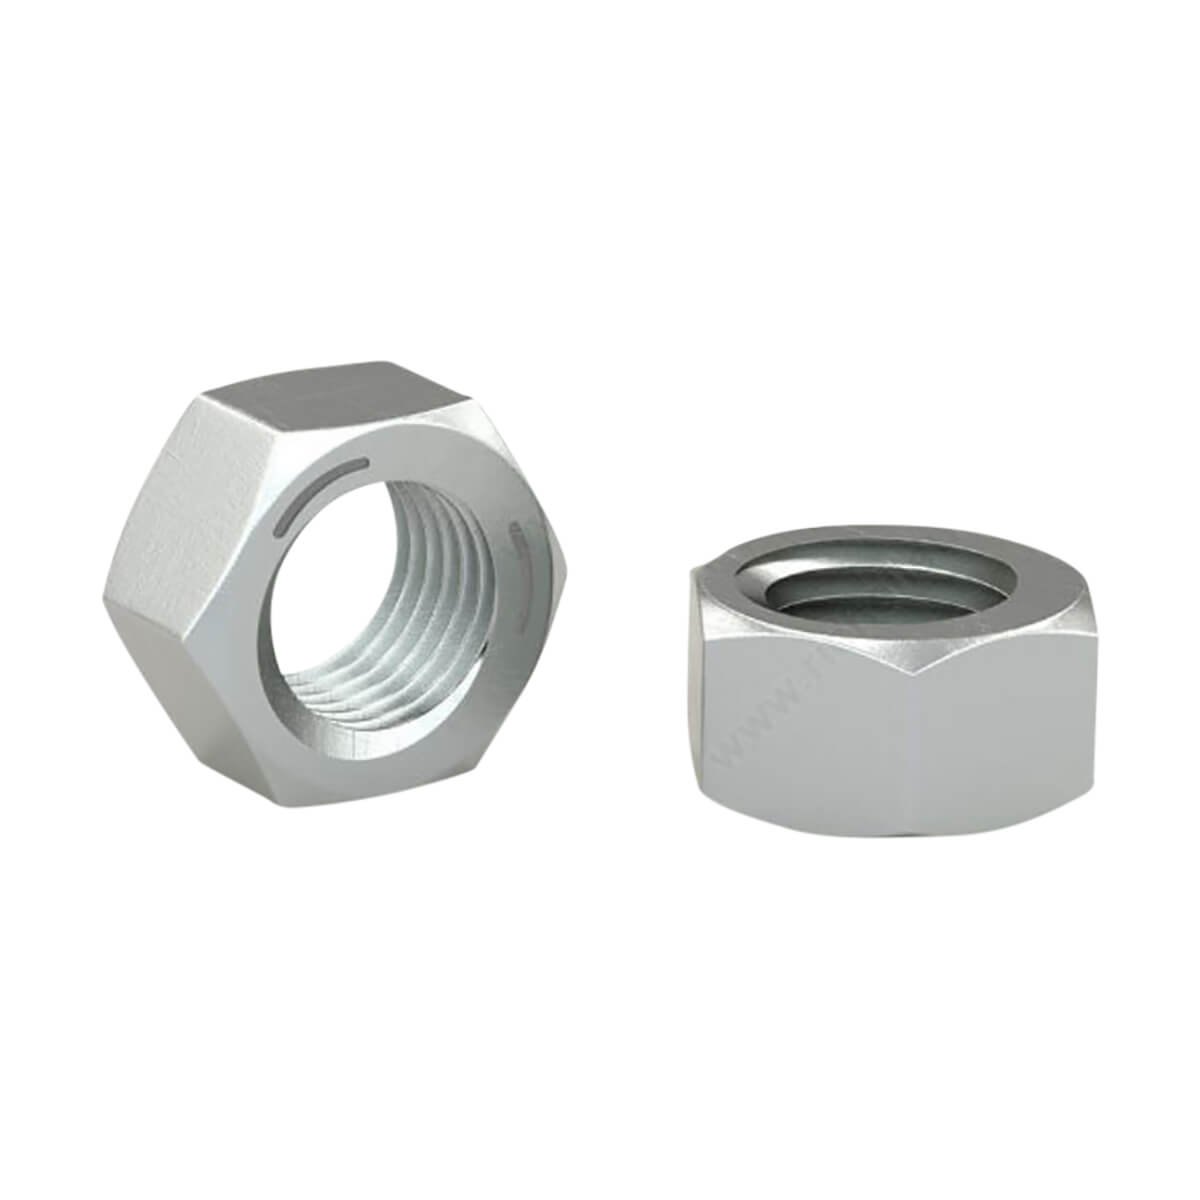 Hexagonal Nut - Grade 5 Steel - 1/4-in X 20 Pitch - 100 Pack